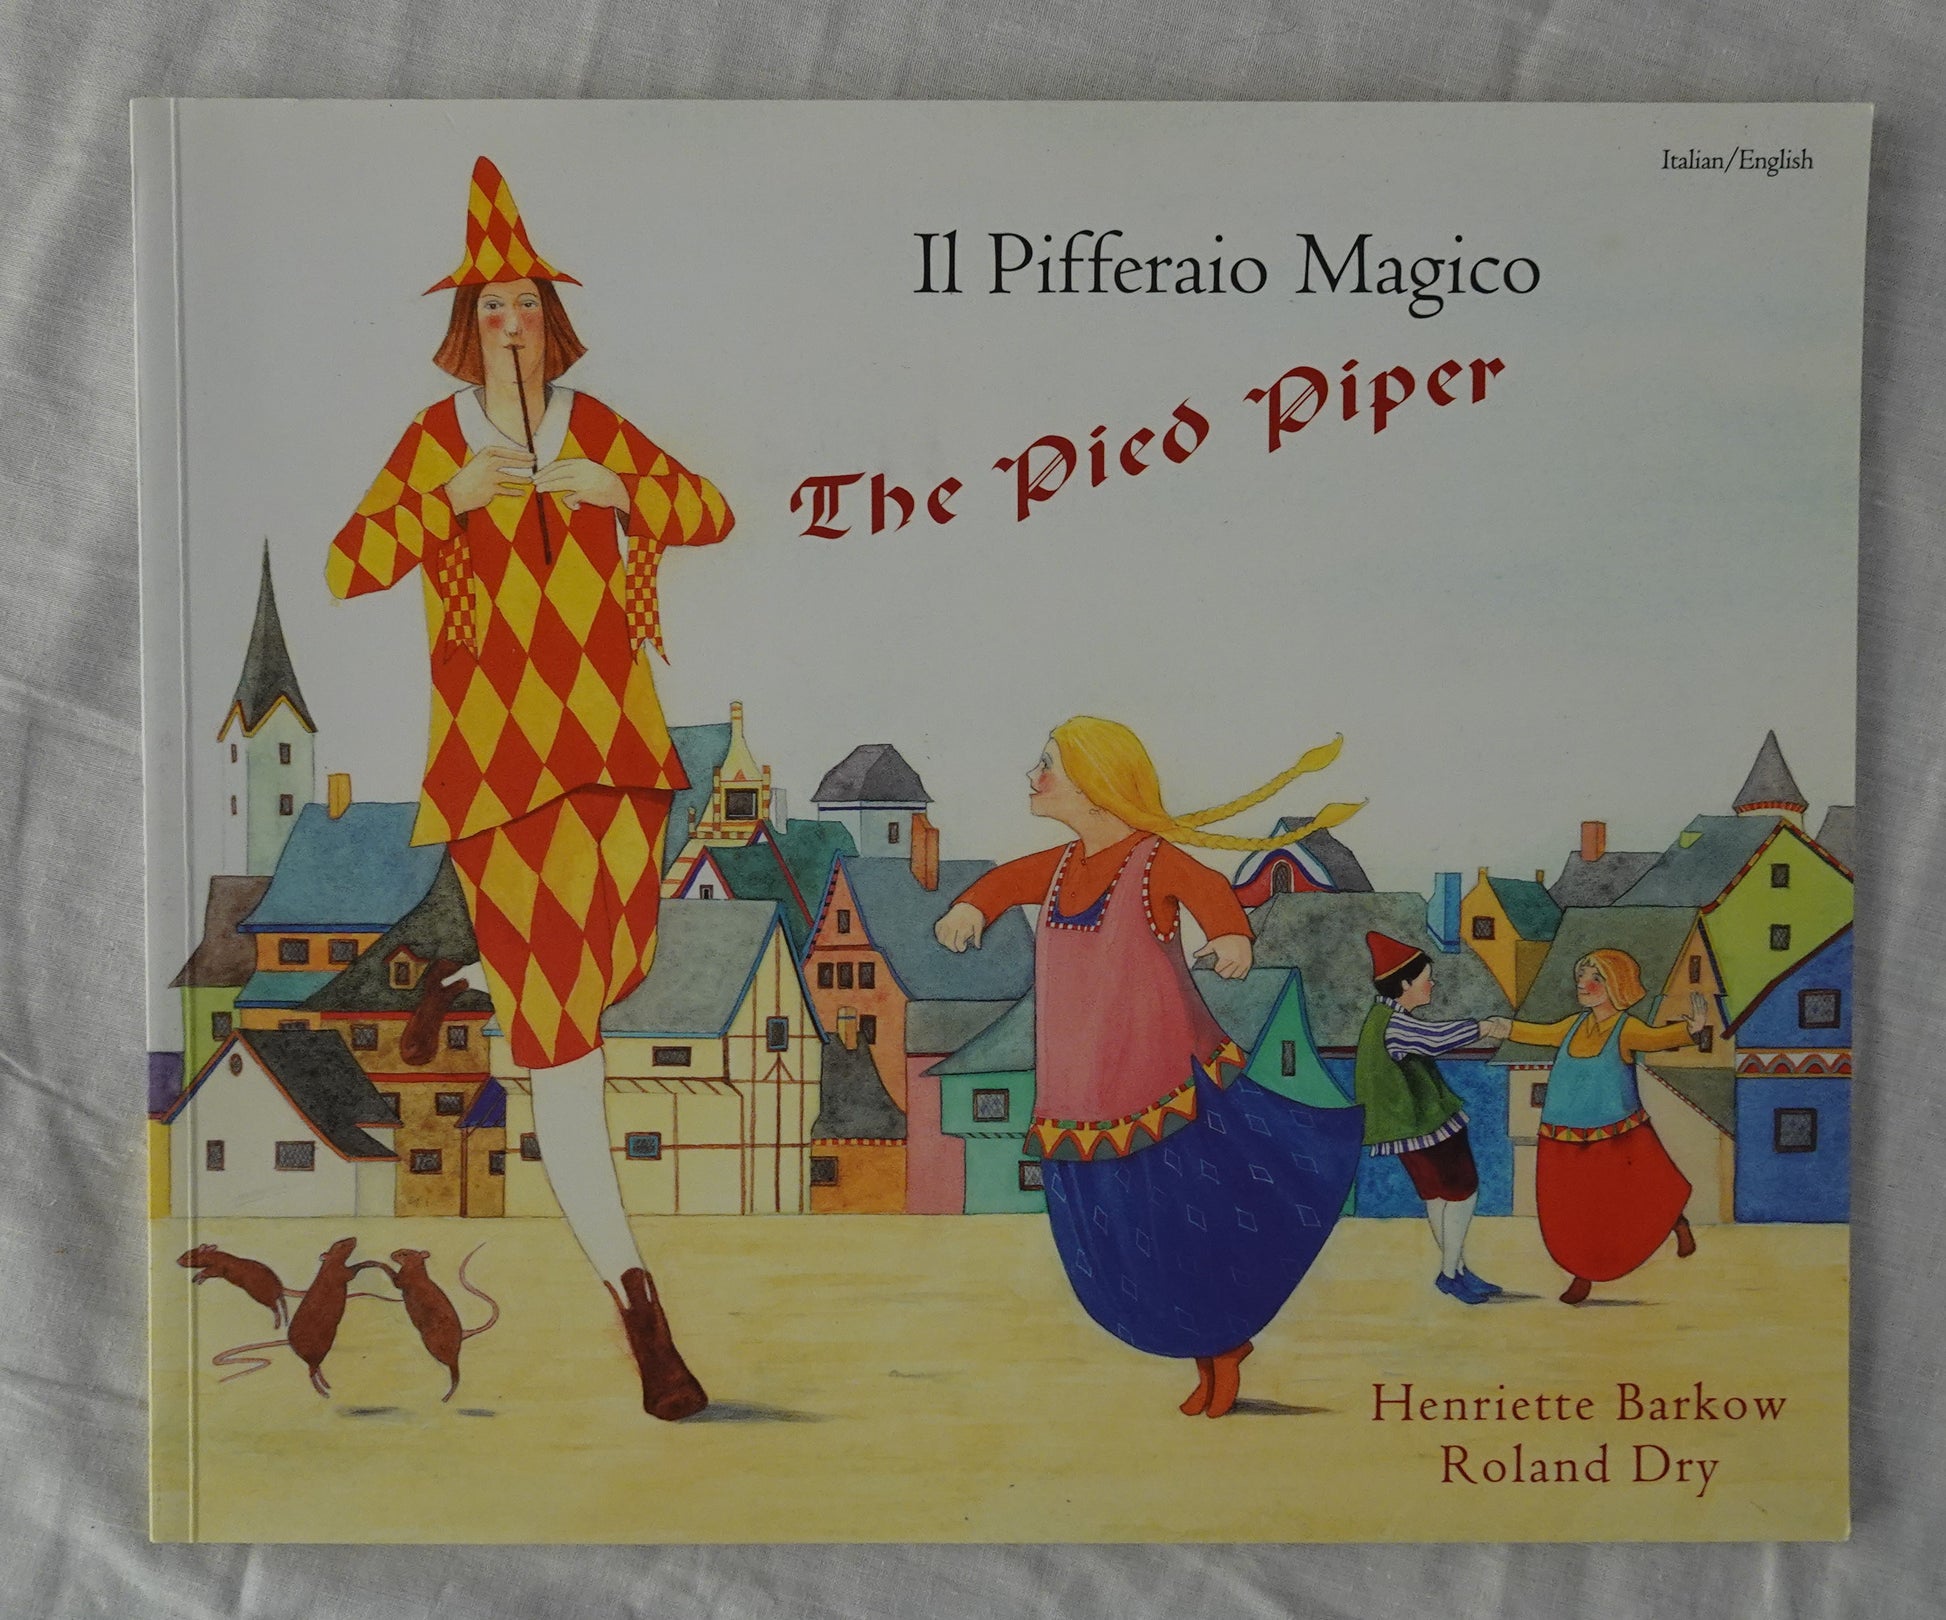 The Pied Piper / II Pifferaio Magico  Retold by Henriette Barkow  Illustrated by Roland Dry  Italian translation by Paolo Antonioni